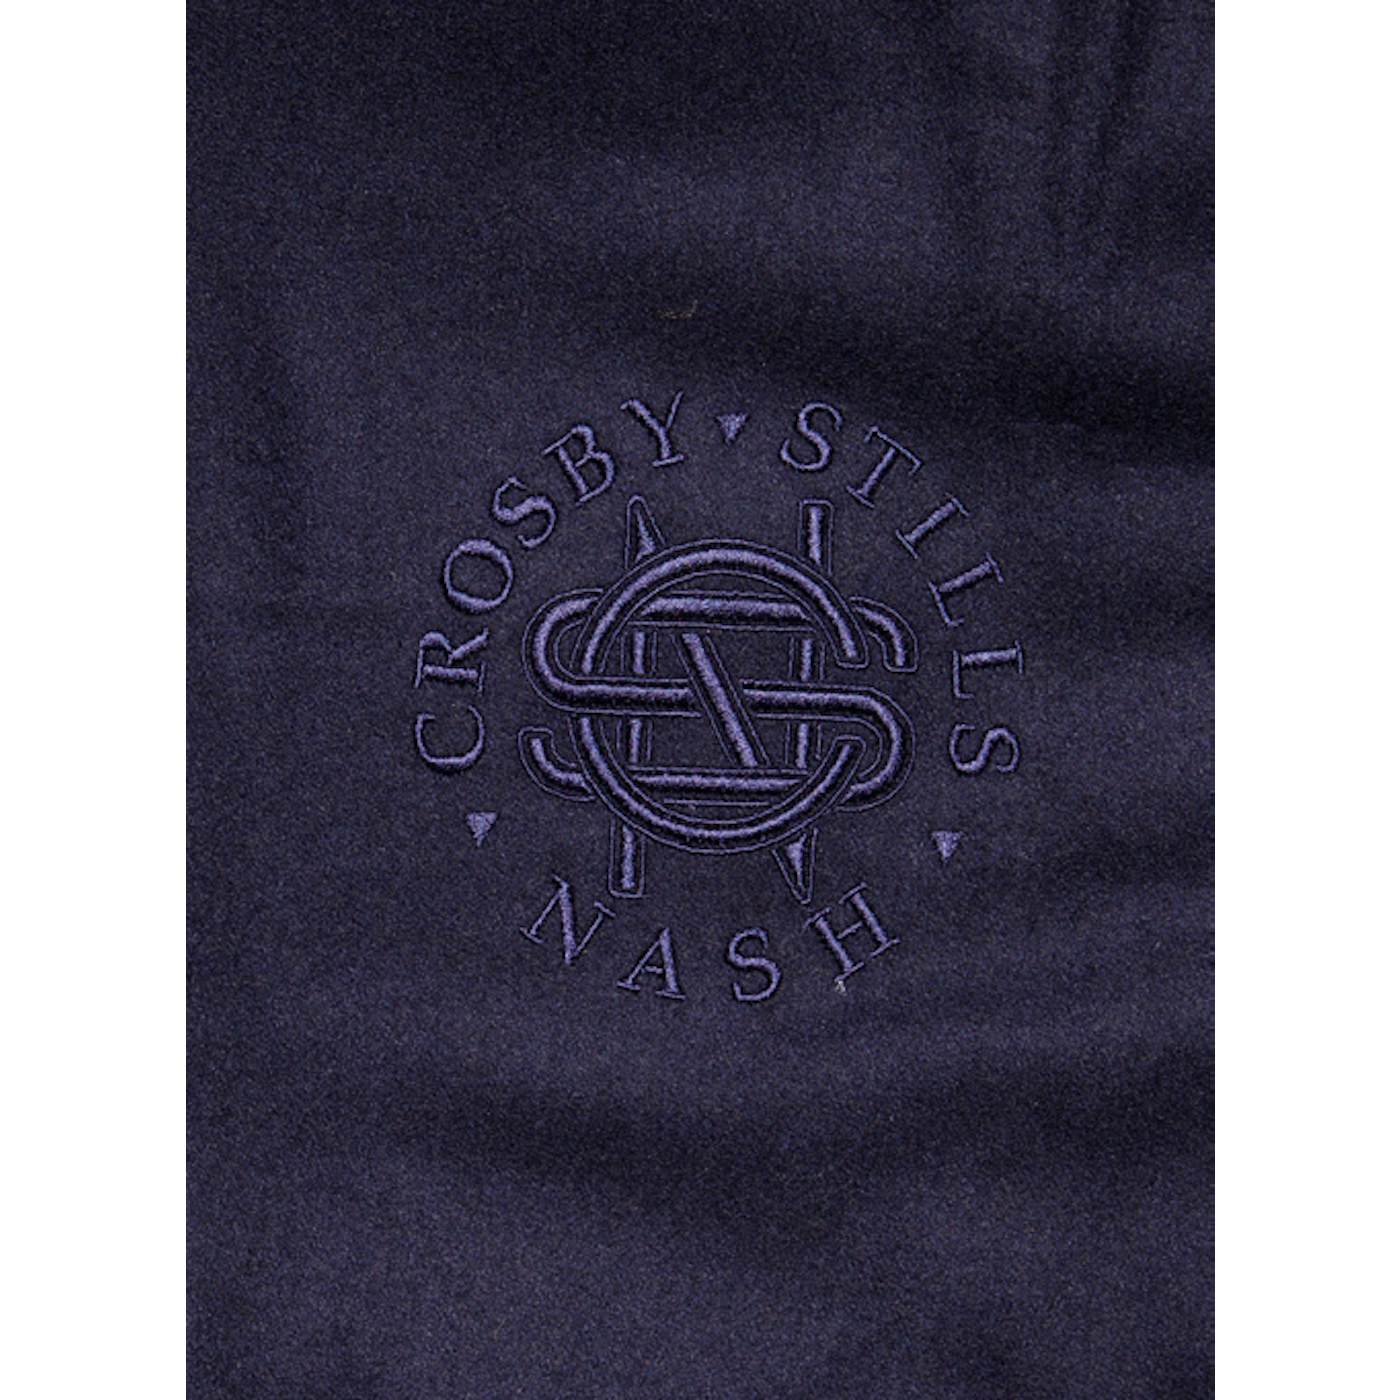 Crosby, Stills & Nash Blue Letterman's Jacket-Wool/Leather